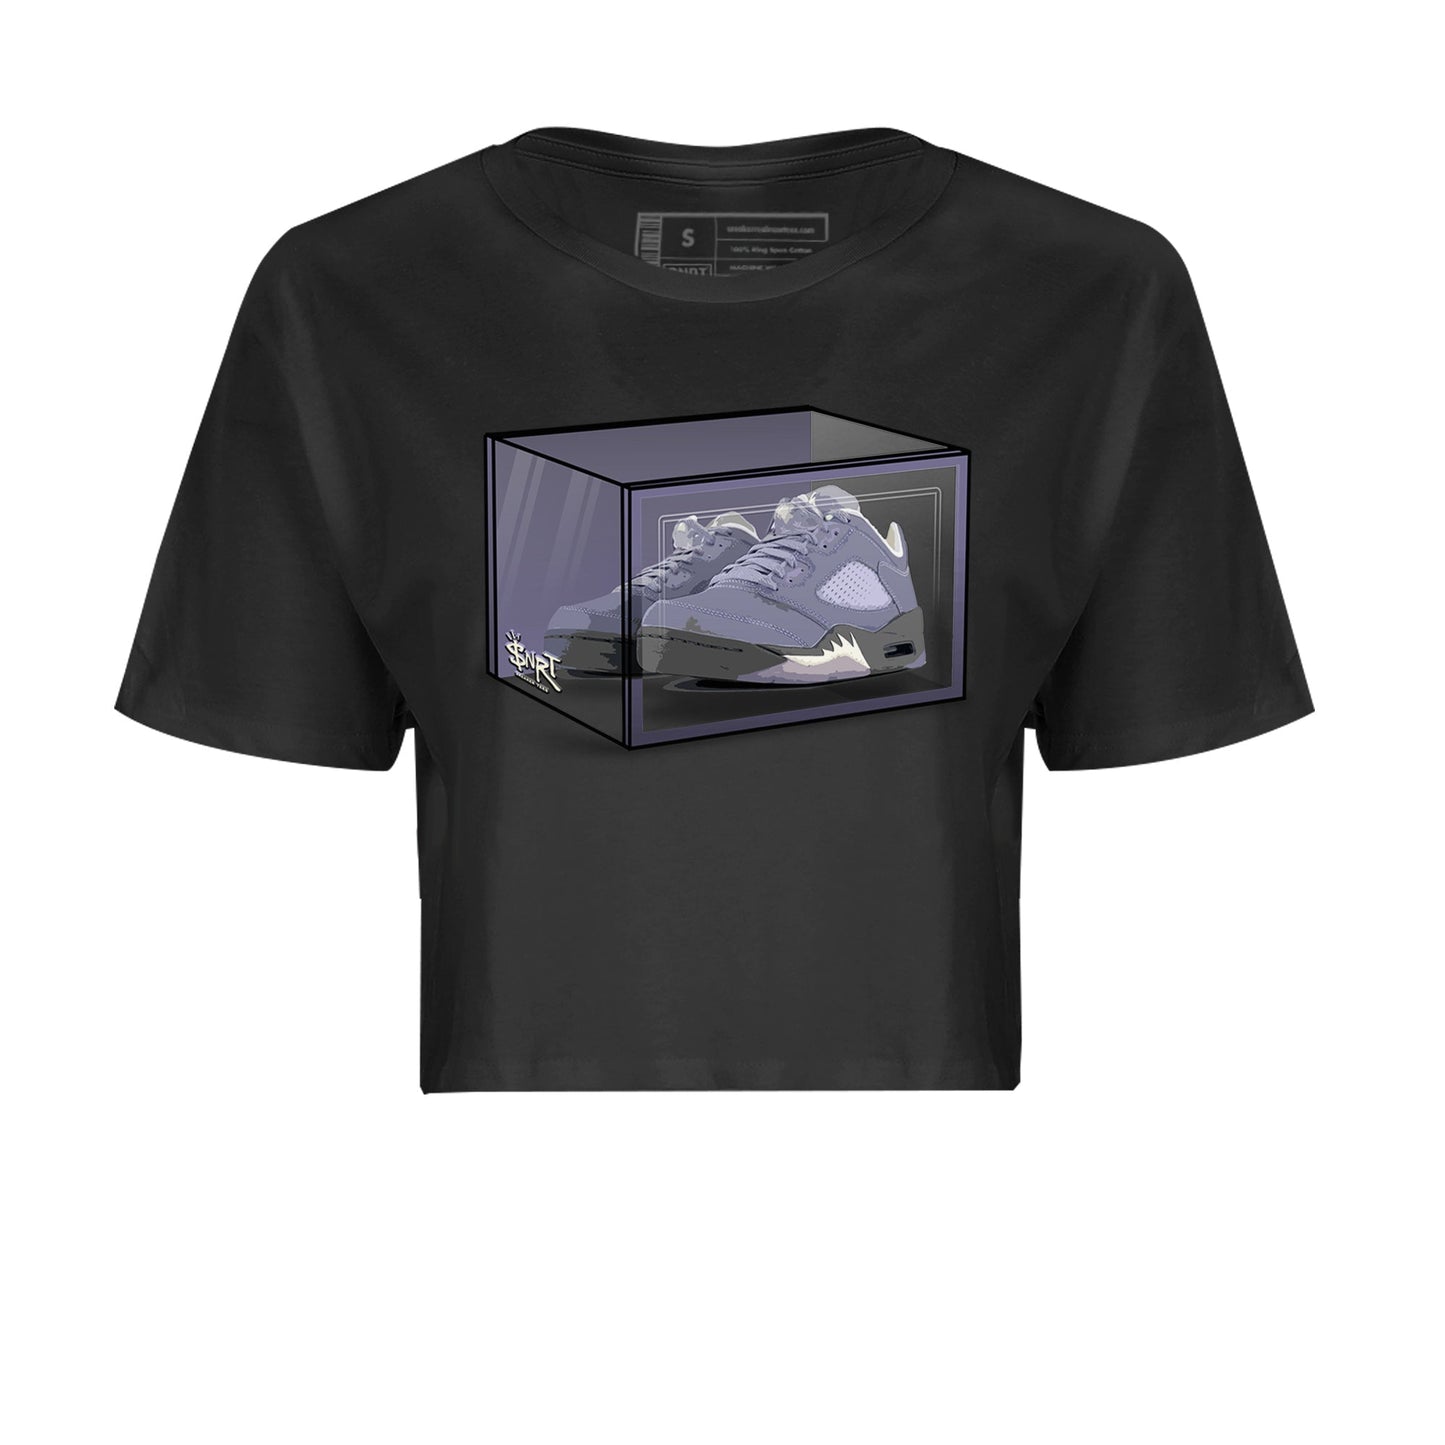 Air Jordan 5 Indigo Haze Sneaker Match Tees Shoe Box Sneaker Tees 5s Indigo Haze Sneaker Release Tees Women's Shirts Black 2